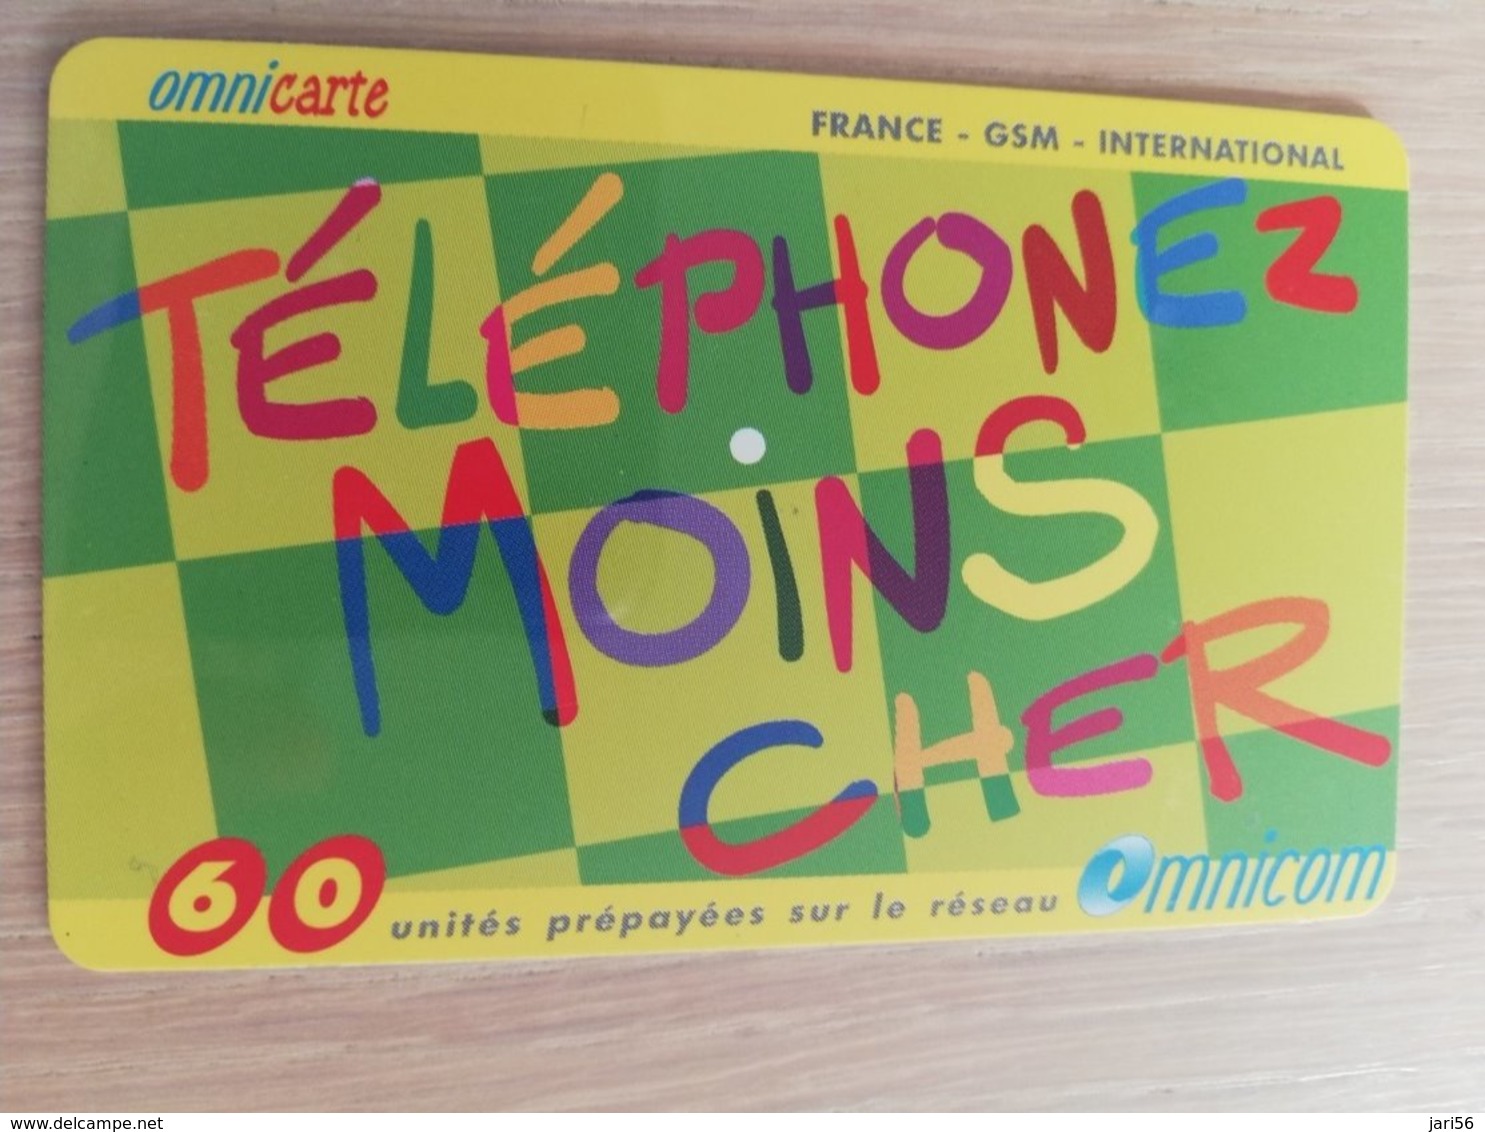 FRANCE/FRANKRIJK  OMNICARTE TELEPHONE MOINS CHER 60 UNITS PREPAID  USED    ** 1510** - Per Cellulari (telefonini/schede SIM)